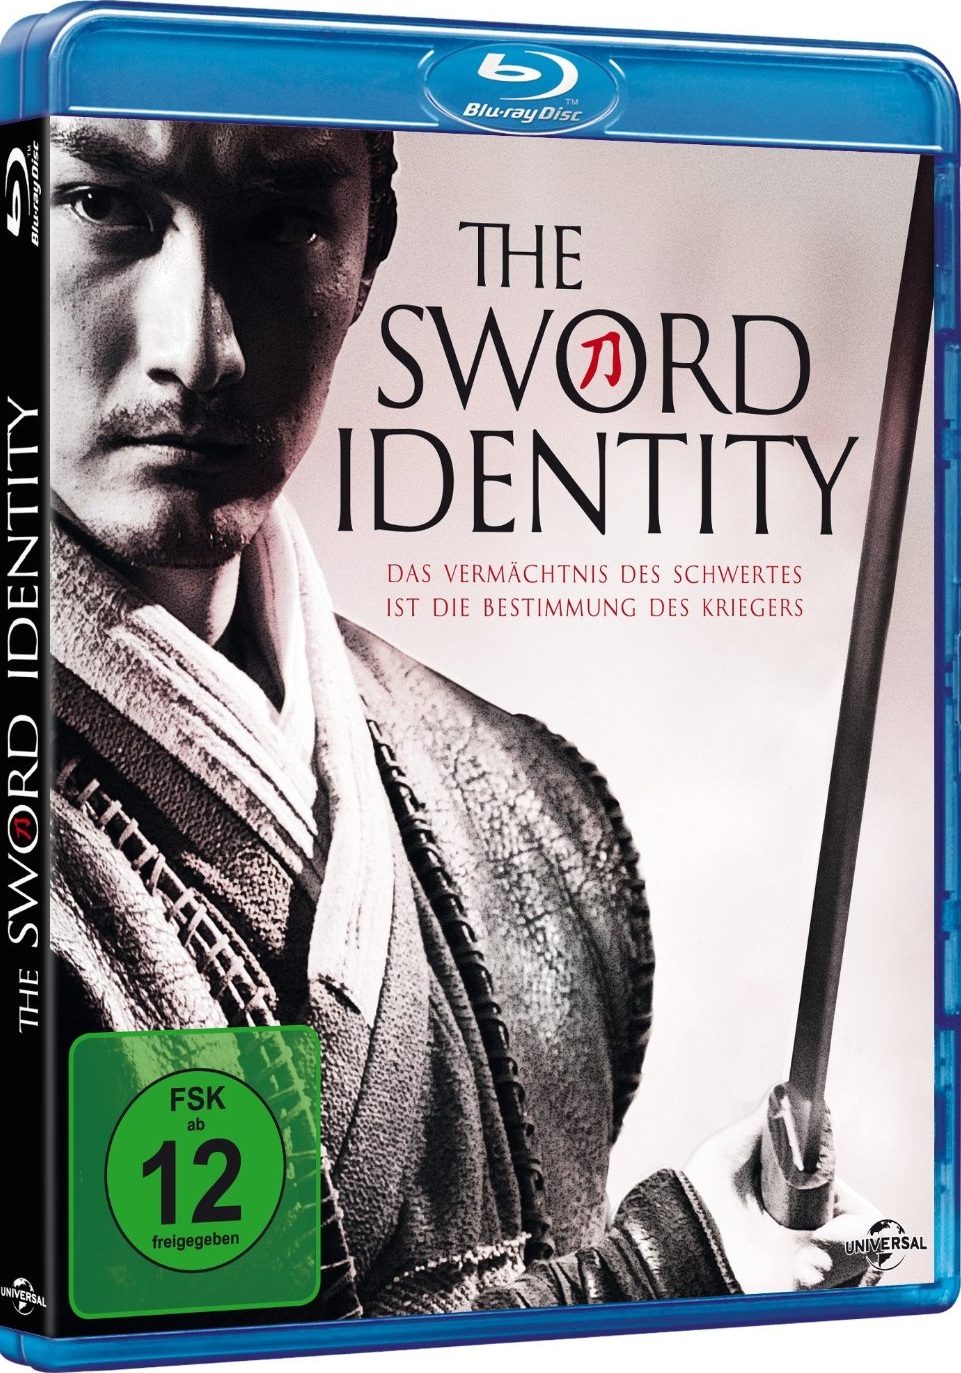 [倭寇的踪迹].The.Sword.Identity.2011.GER.BluRay.1080p.AVC.DTS-HD.MA.5.1-NGPan   30.07G-1.jpg